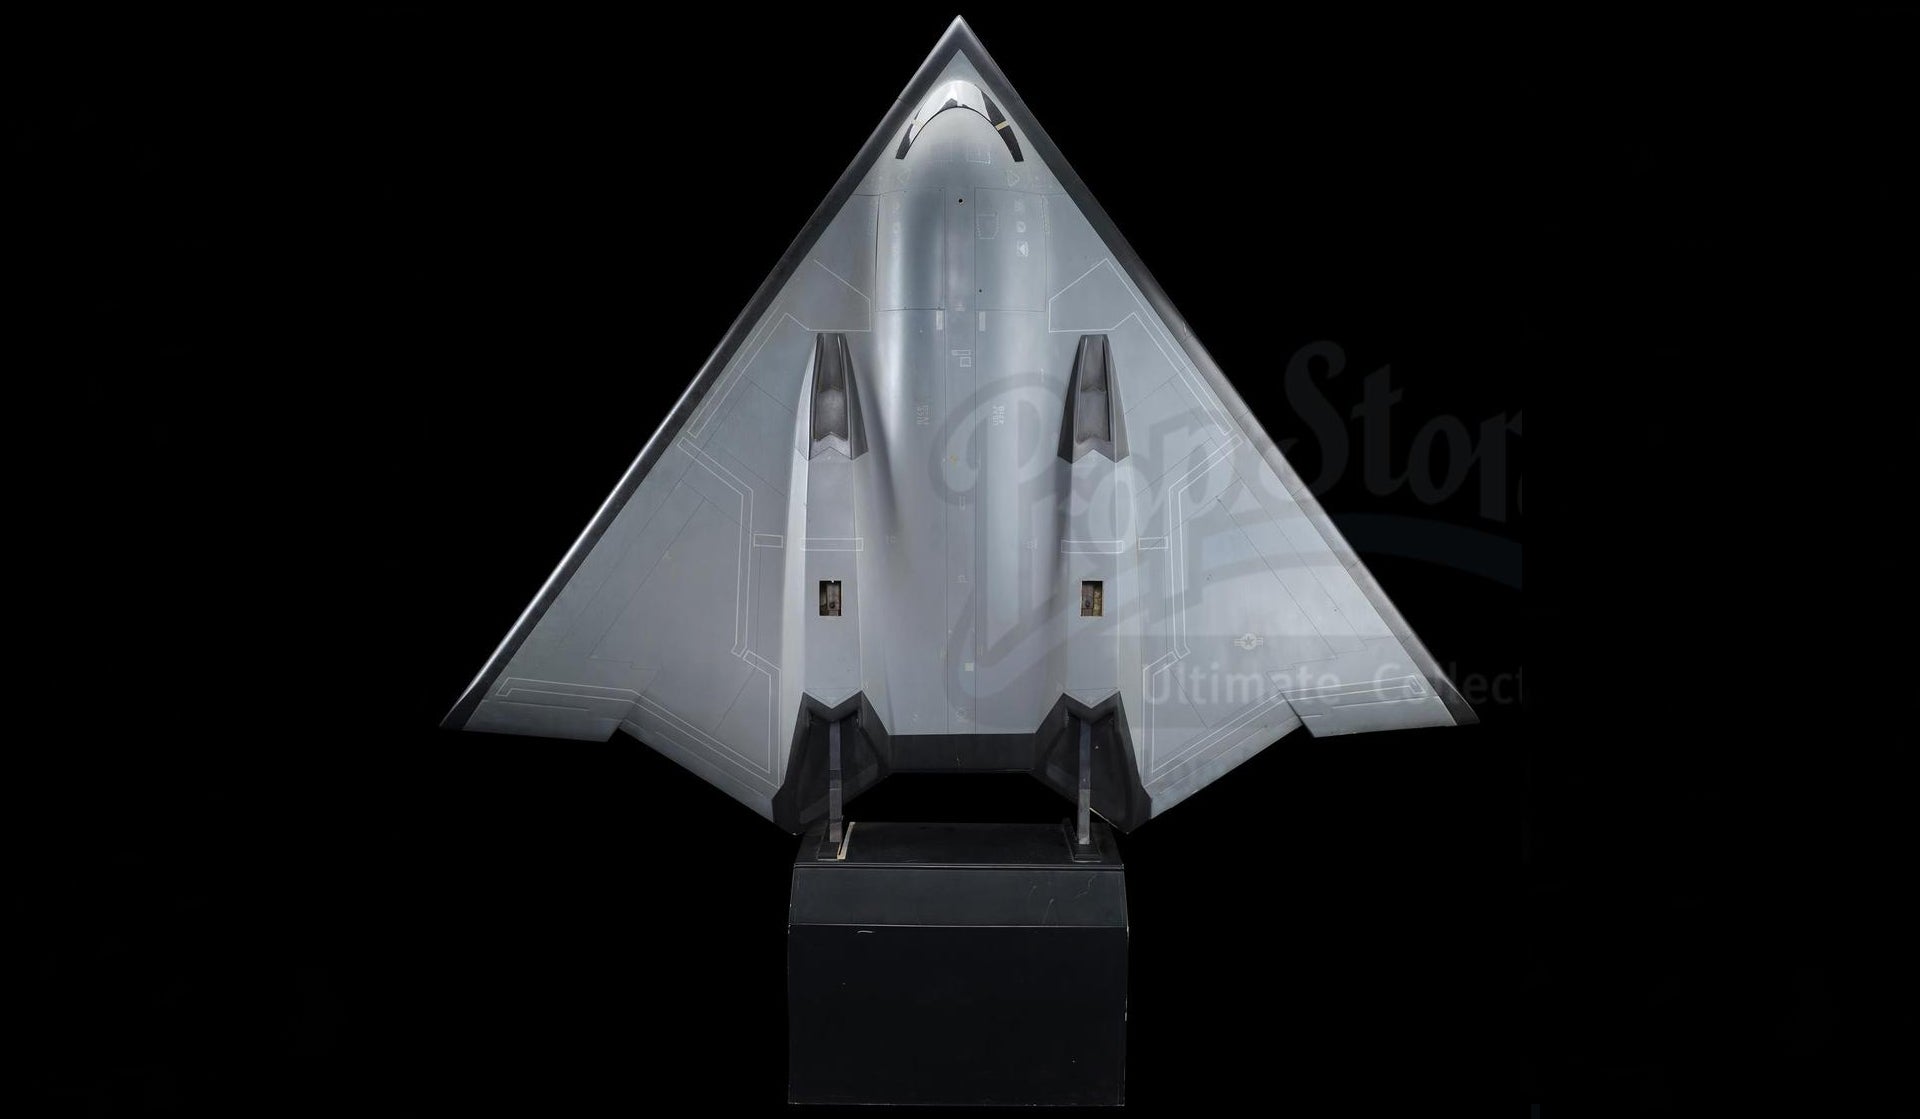 Giant Studio Model Of Broken Arrow's B-3 Stealth Bomber Is On The